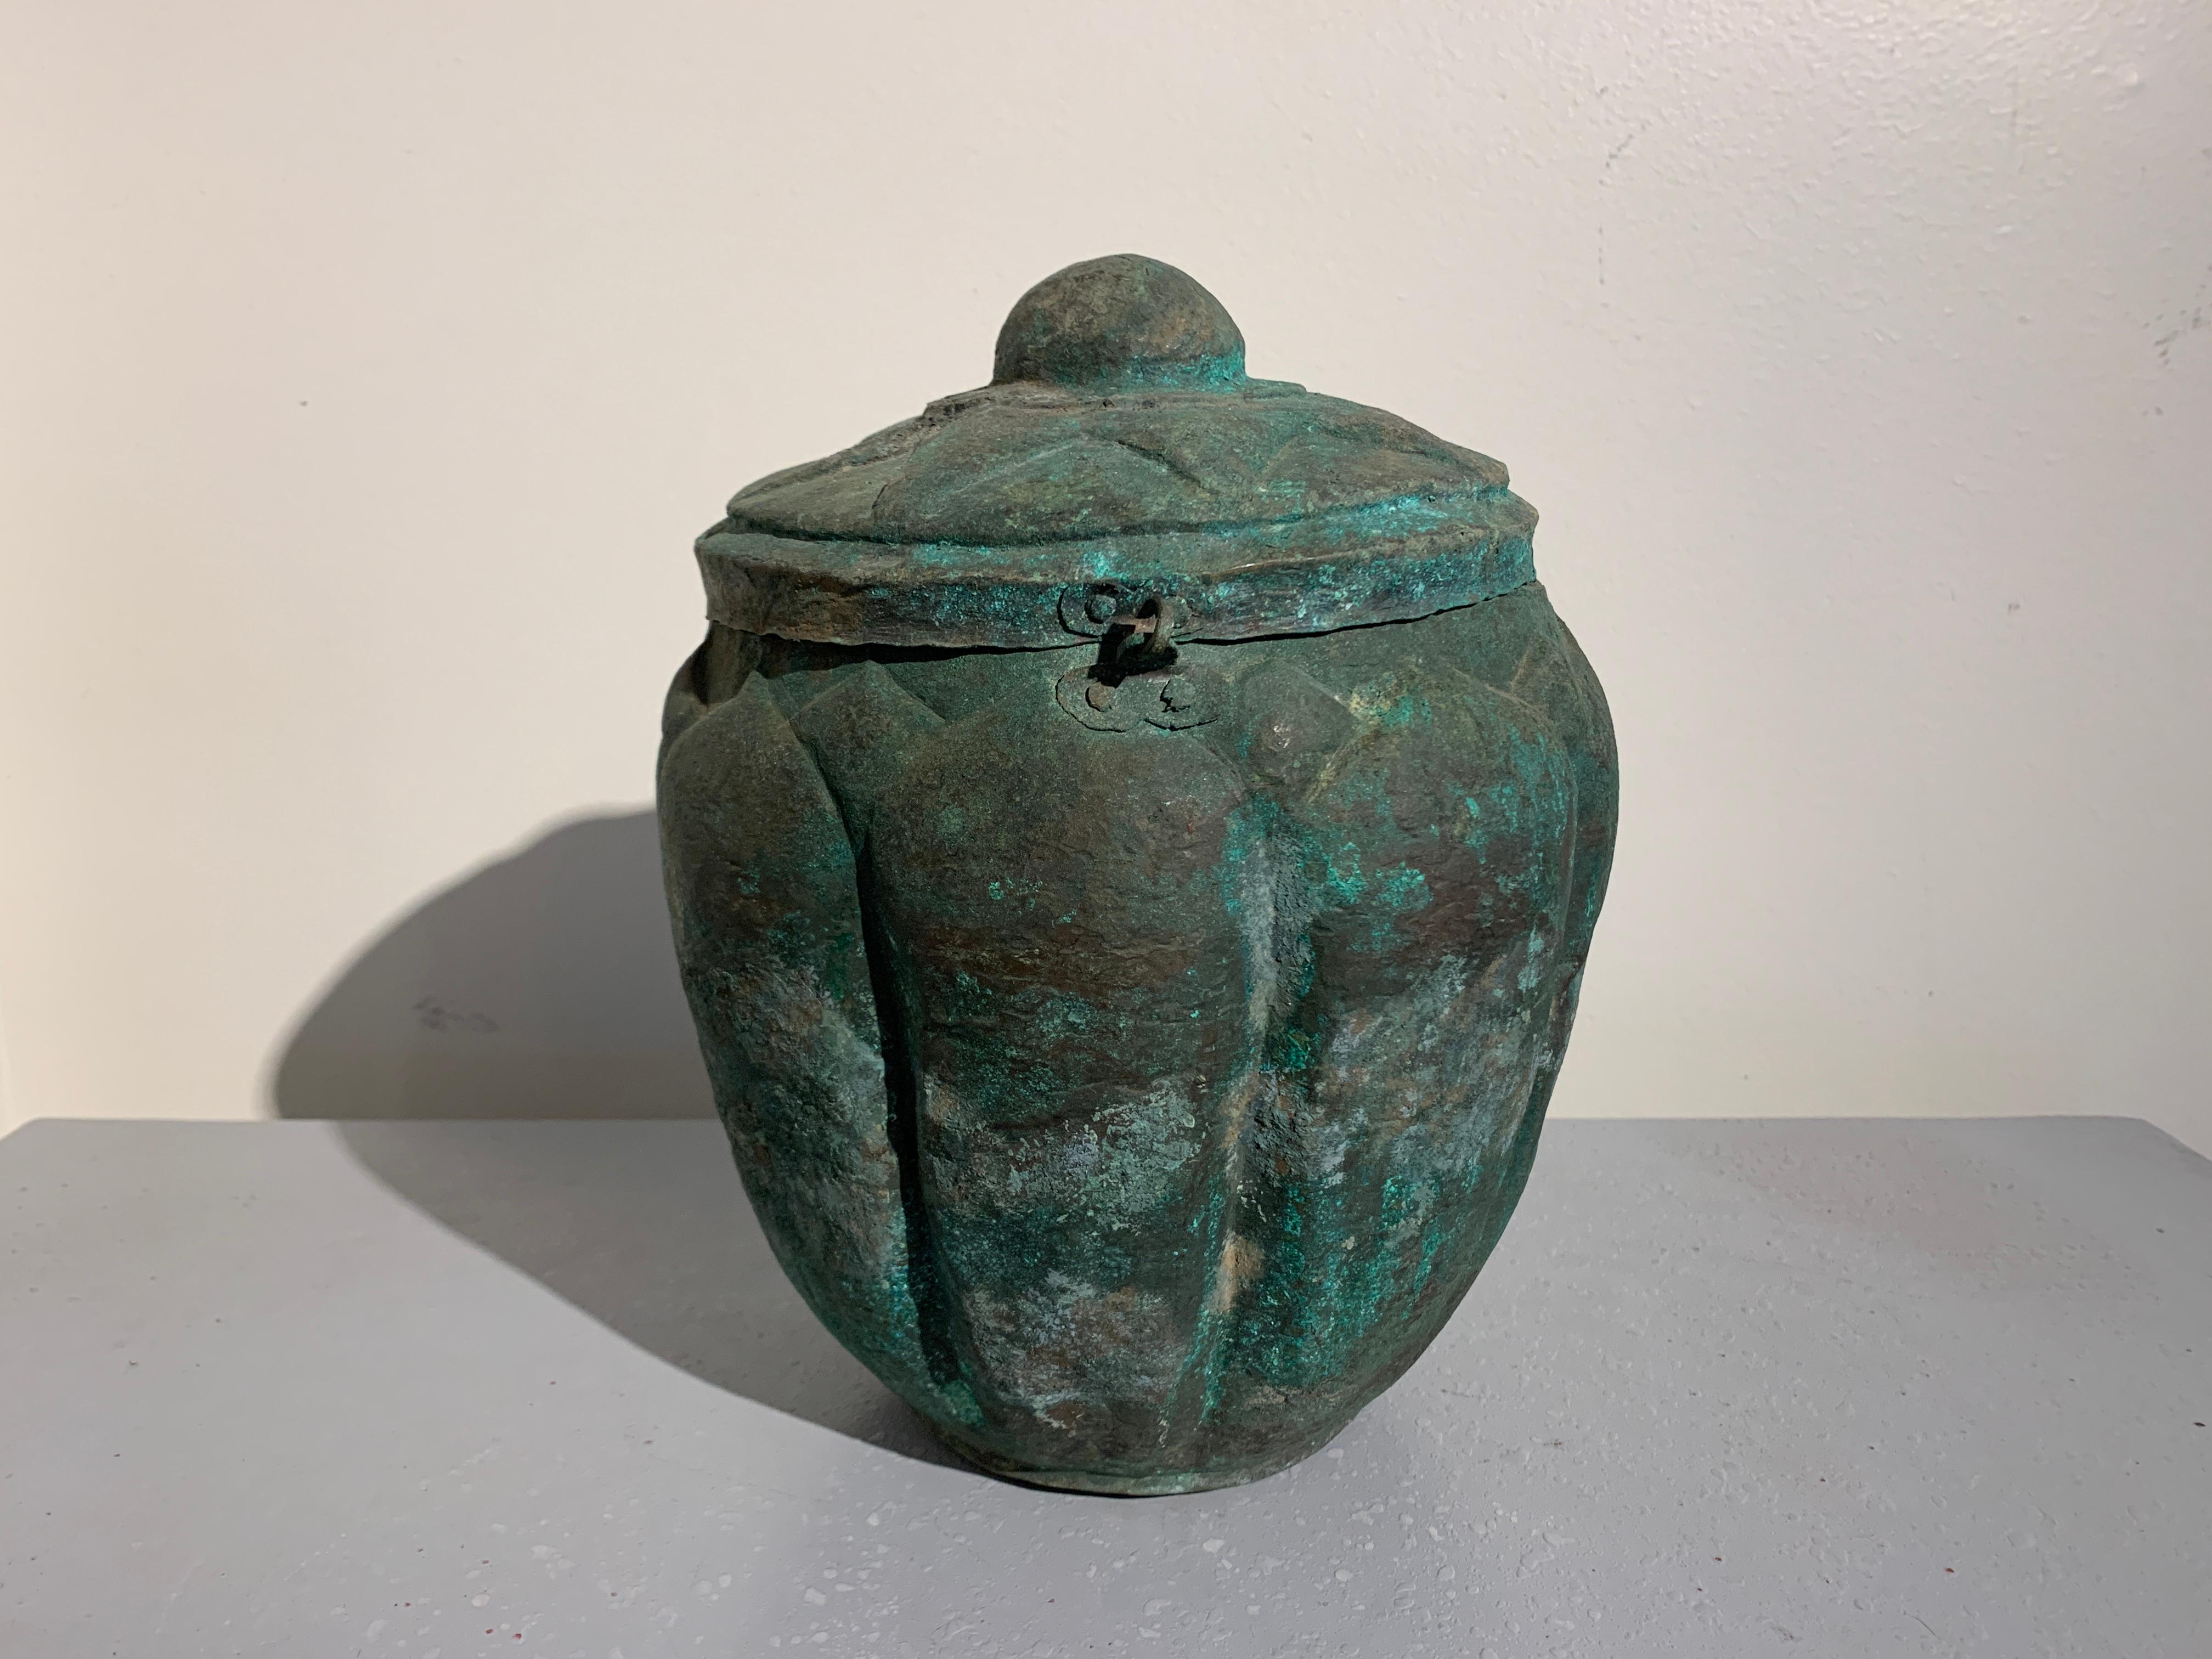 Repoussé Chinese Yuan Dynasty Bronze Lotus Jar, 14th Century, China